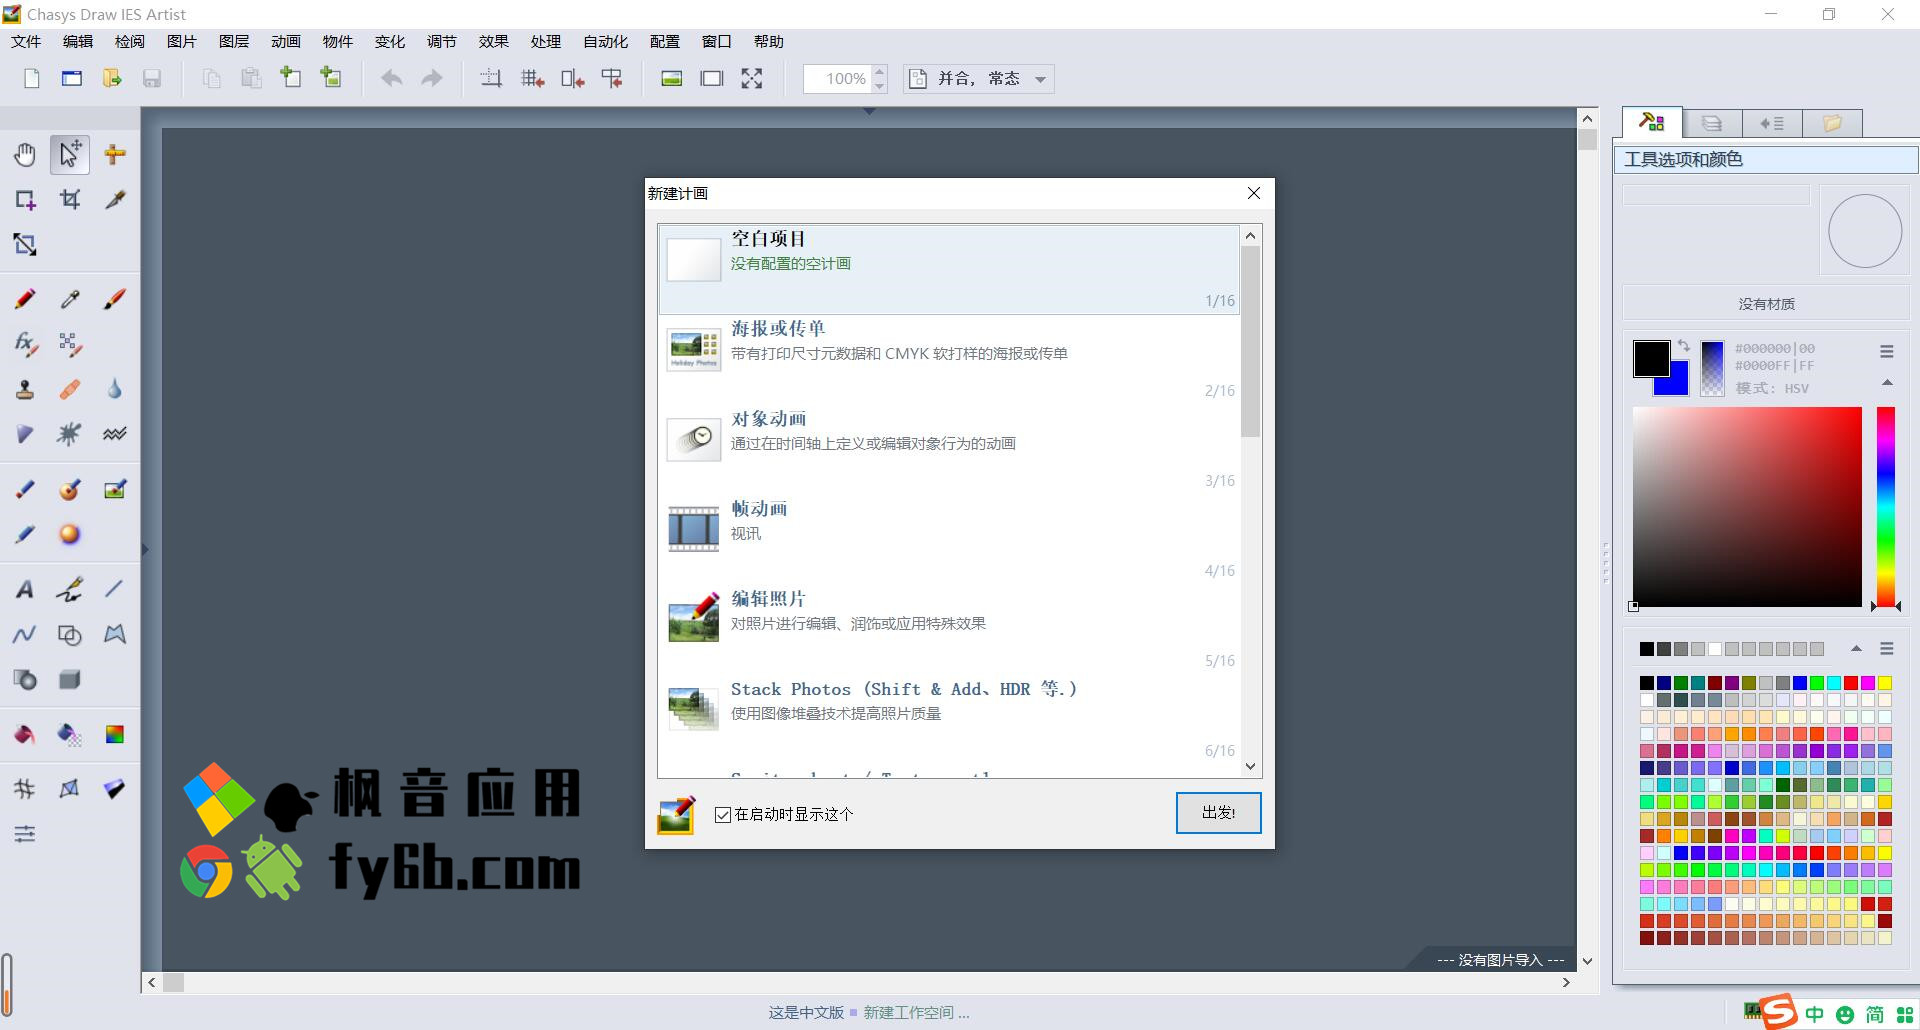 Windows Chasys Draw IES Artist图像编辑 v5.16 绿色中文本